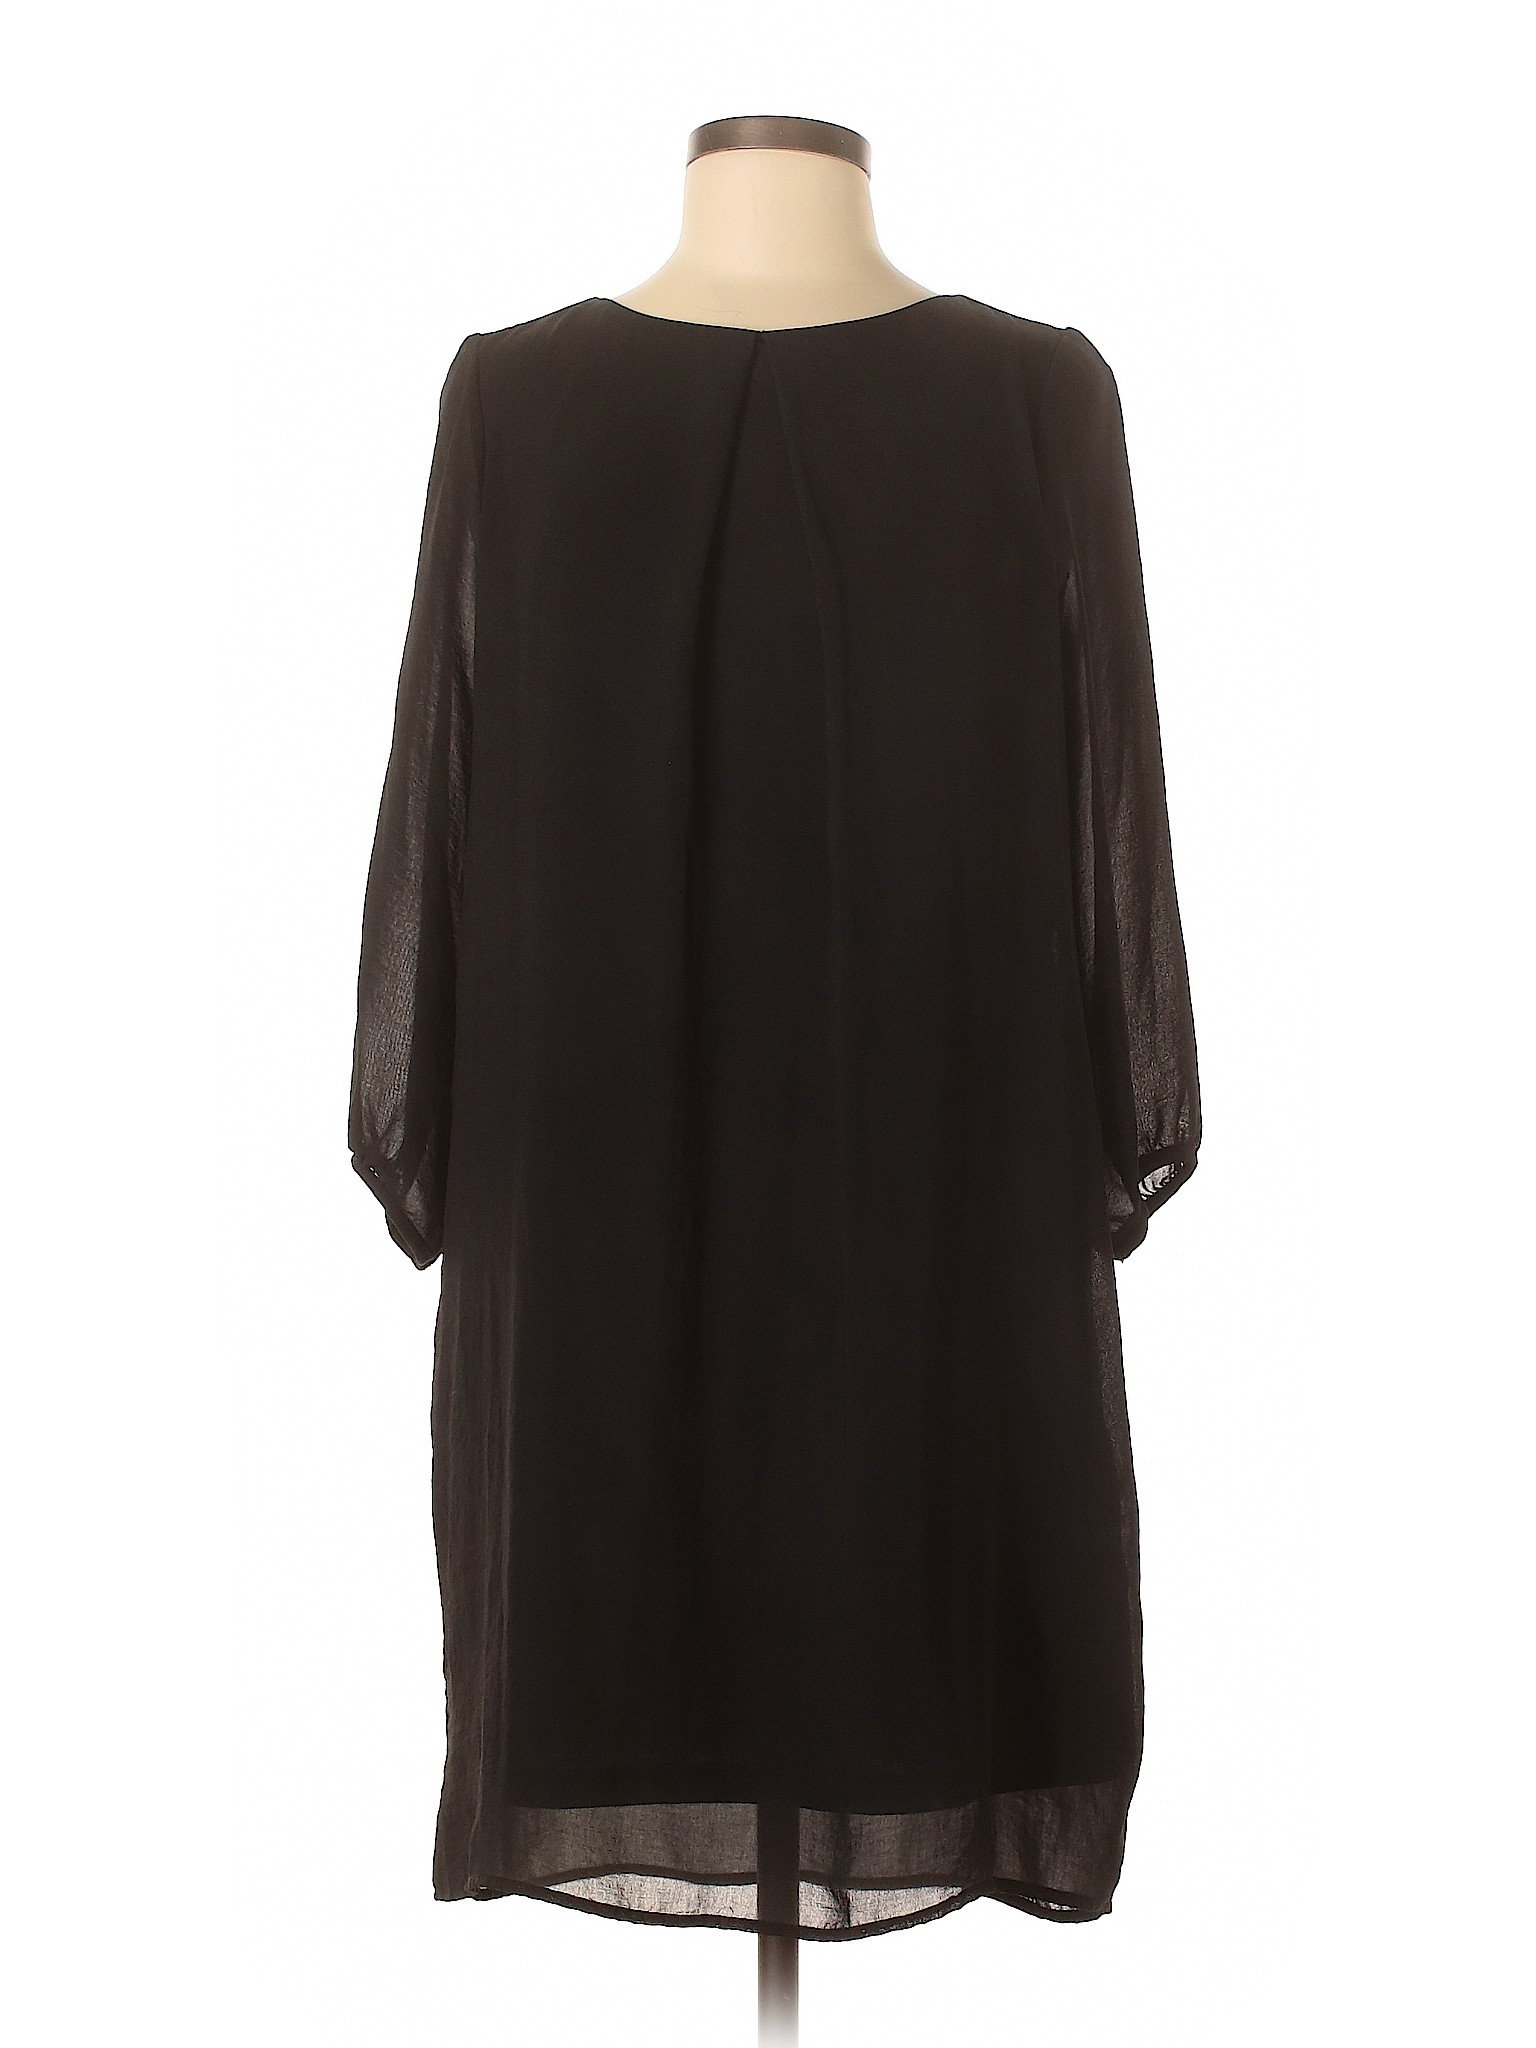 H&M Women Black Casual Dress 8 | eBay